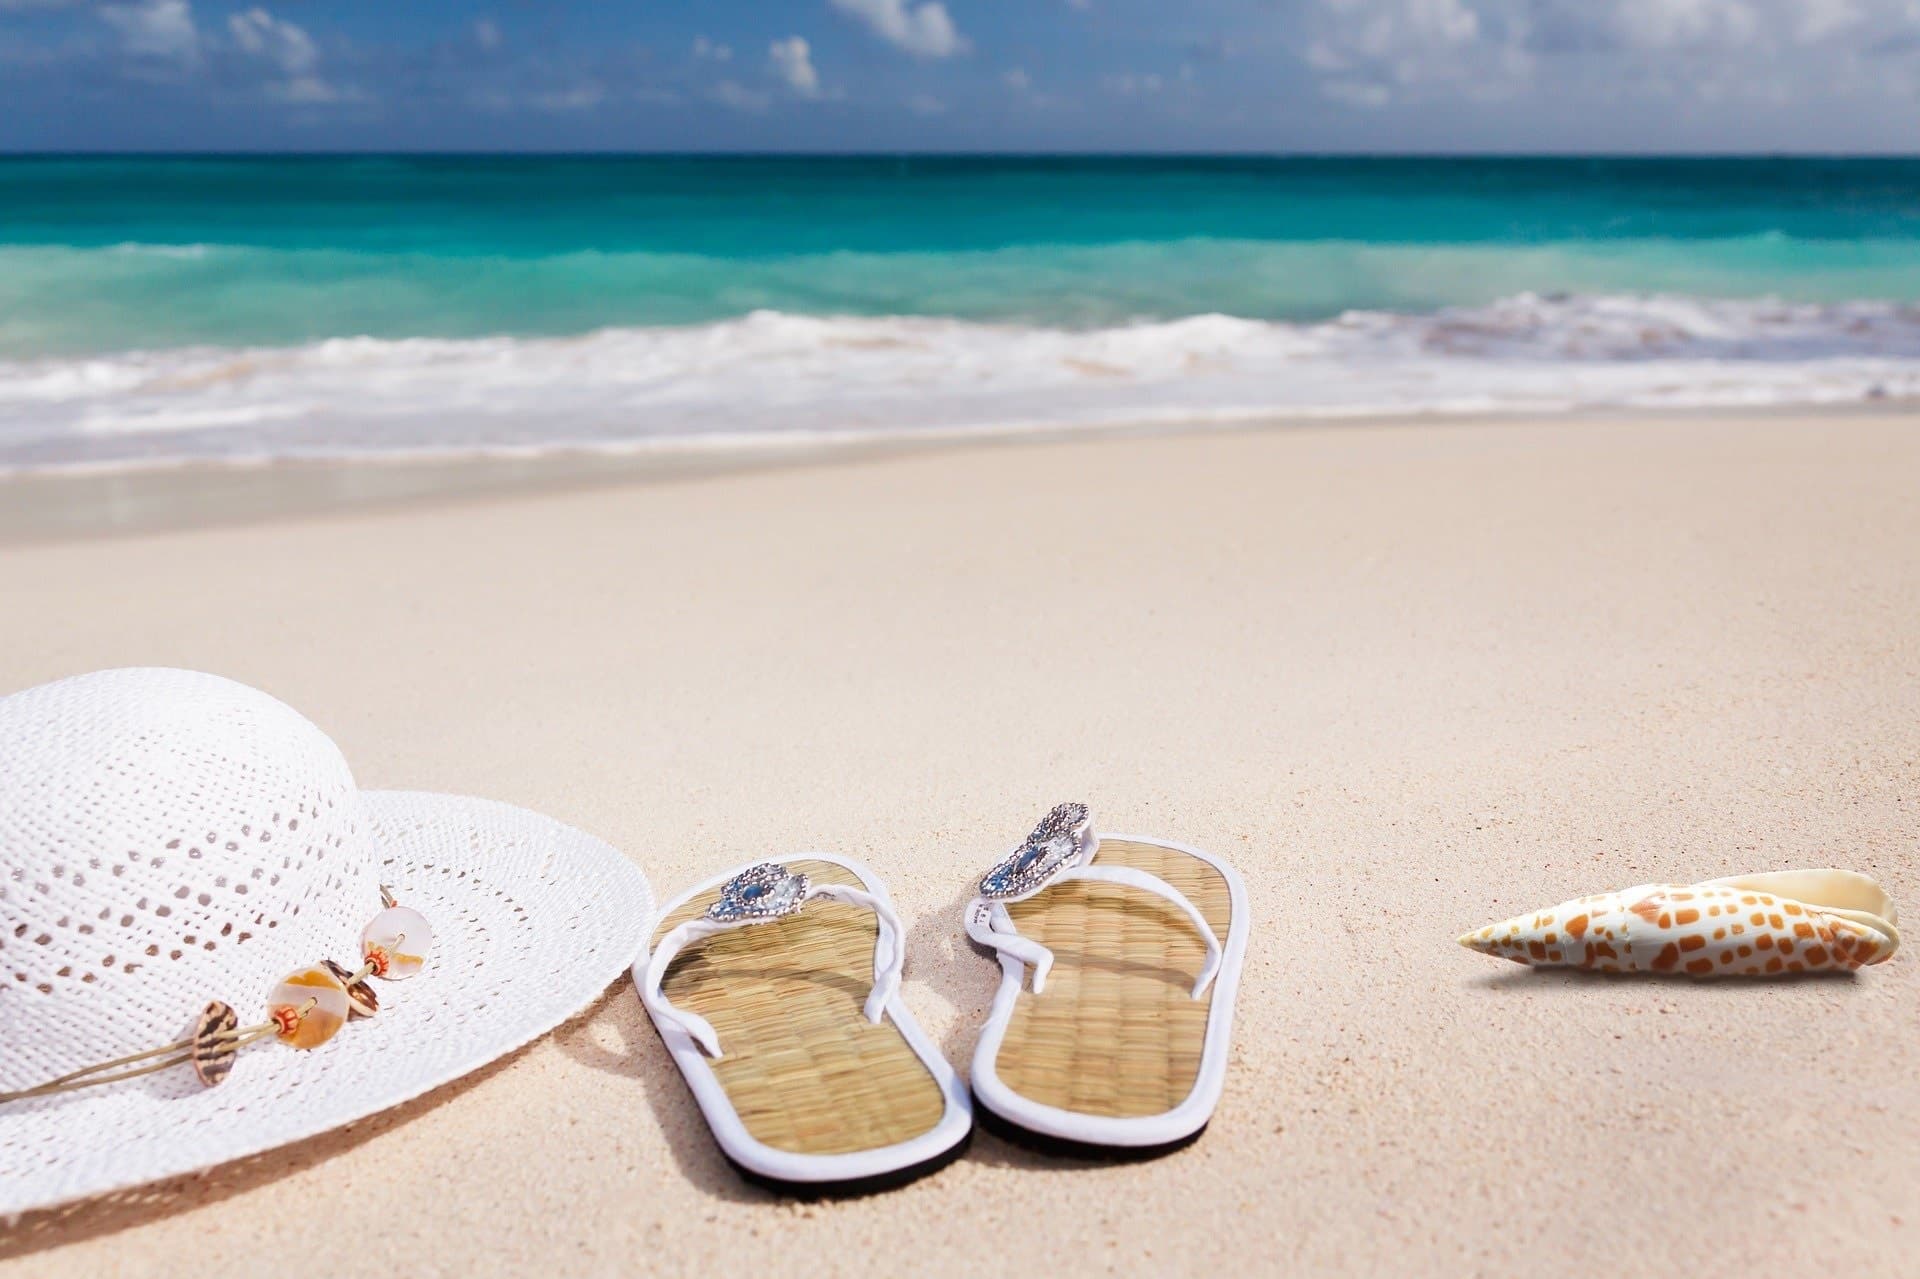 sandals, a sunhat, and a shell on a beach